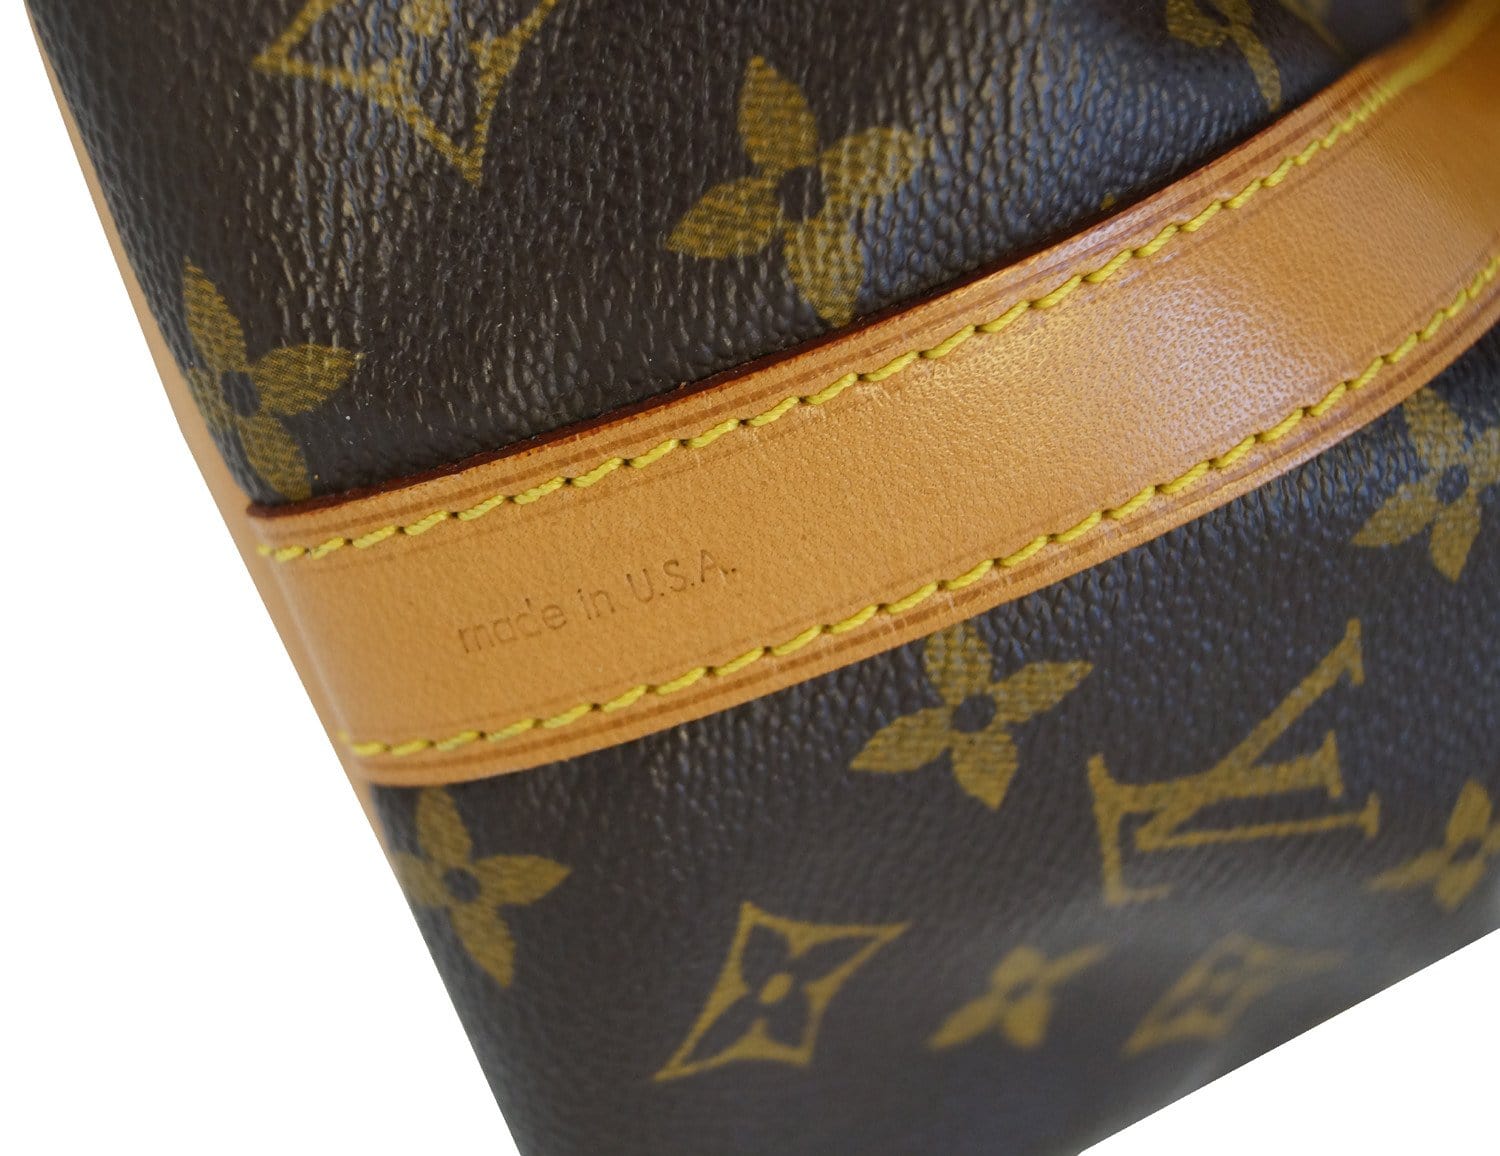 Louis Vuitton Petit Noe NM Handbag Limited Edition Since 1854 Monogram  Jacquard Red 2176571